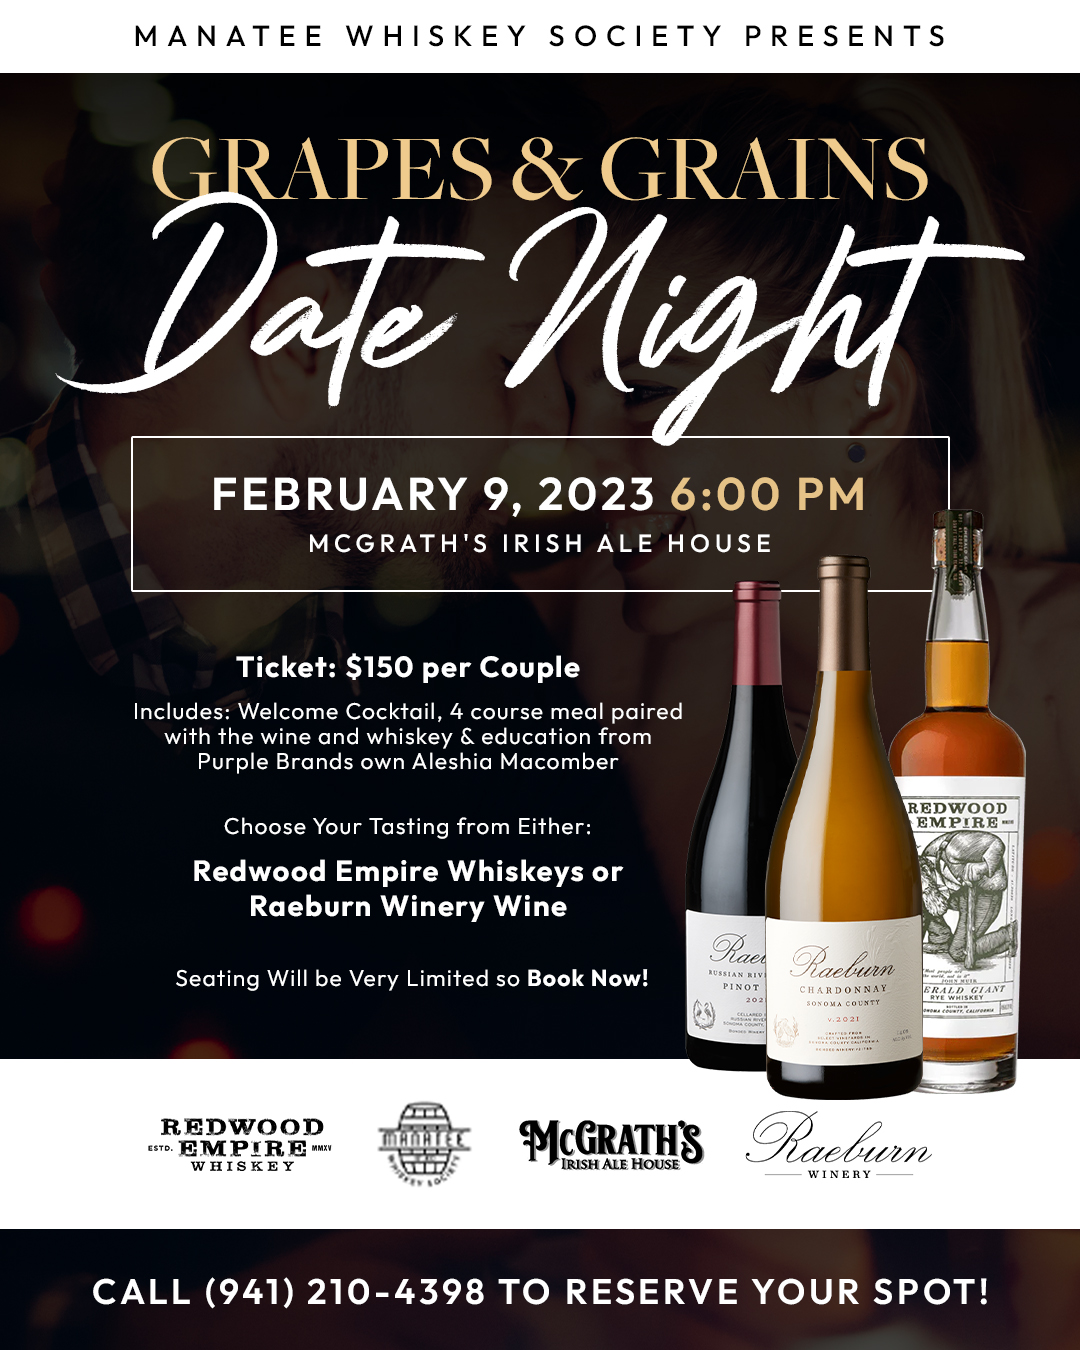 Grapes & Grains Date Night at McGraths